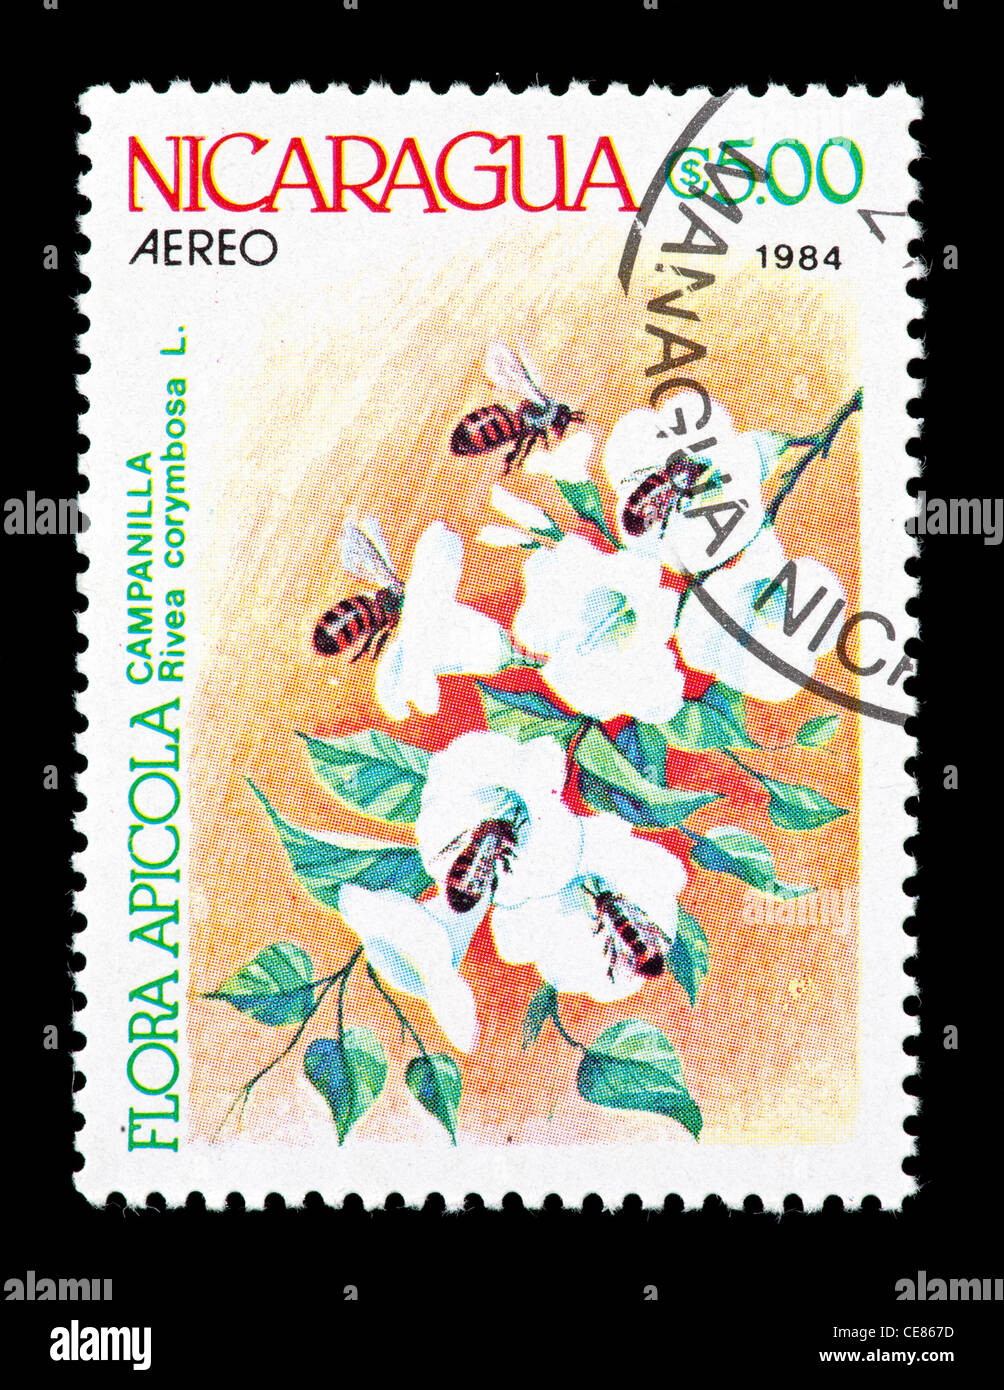 Postage stamp from Nicaragua depicting bees pollinating Christmas vine (Rivea corymbosa). Stock Photo